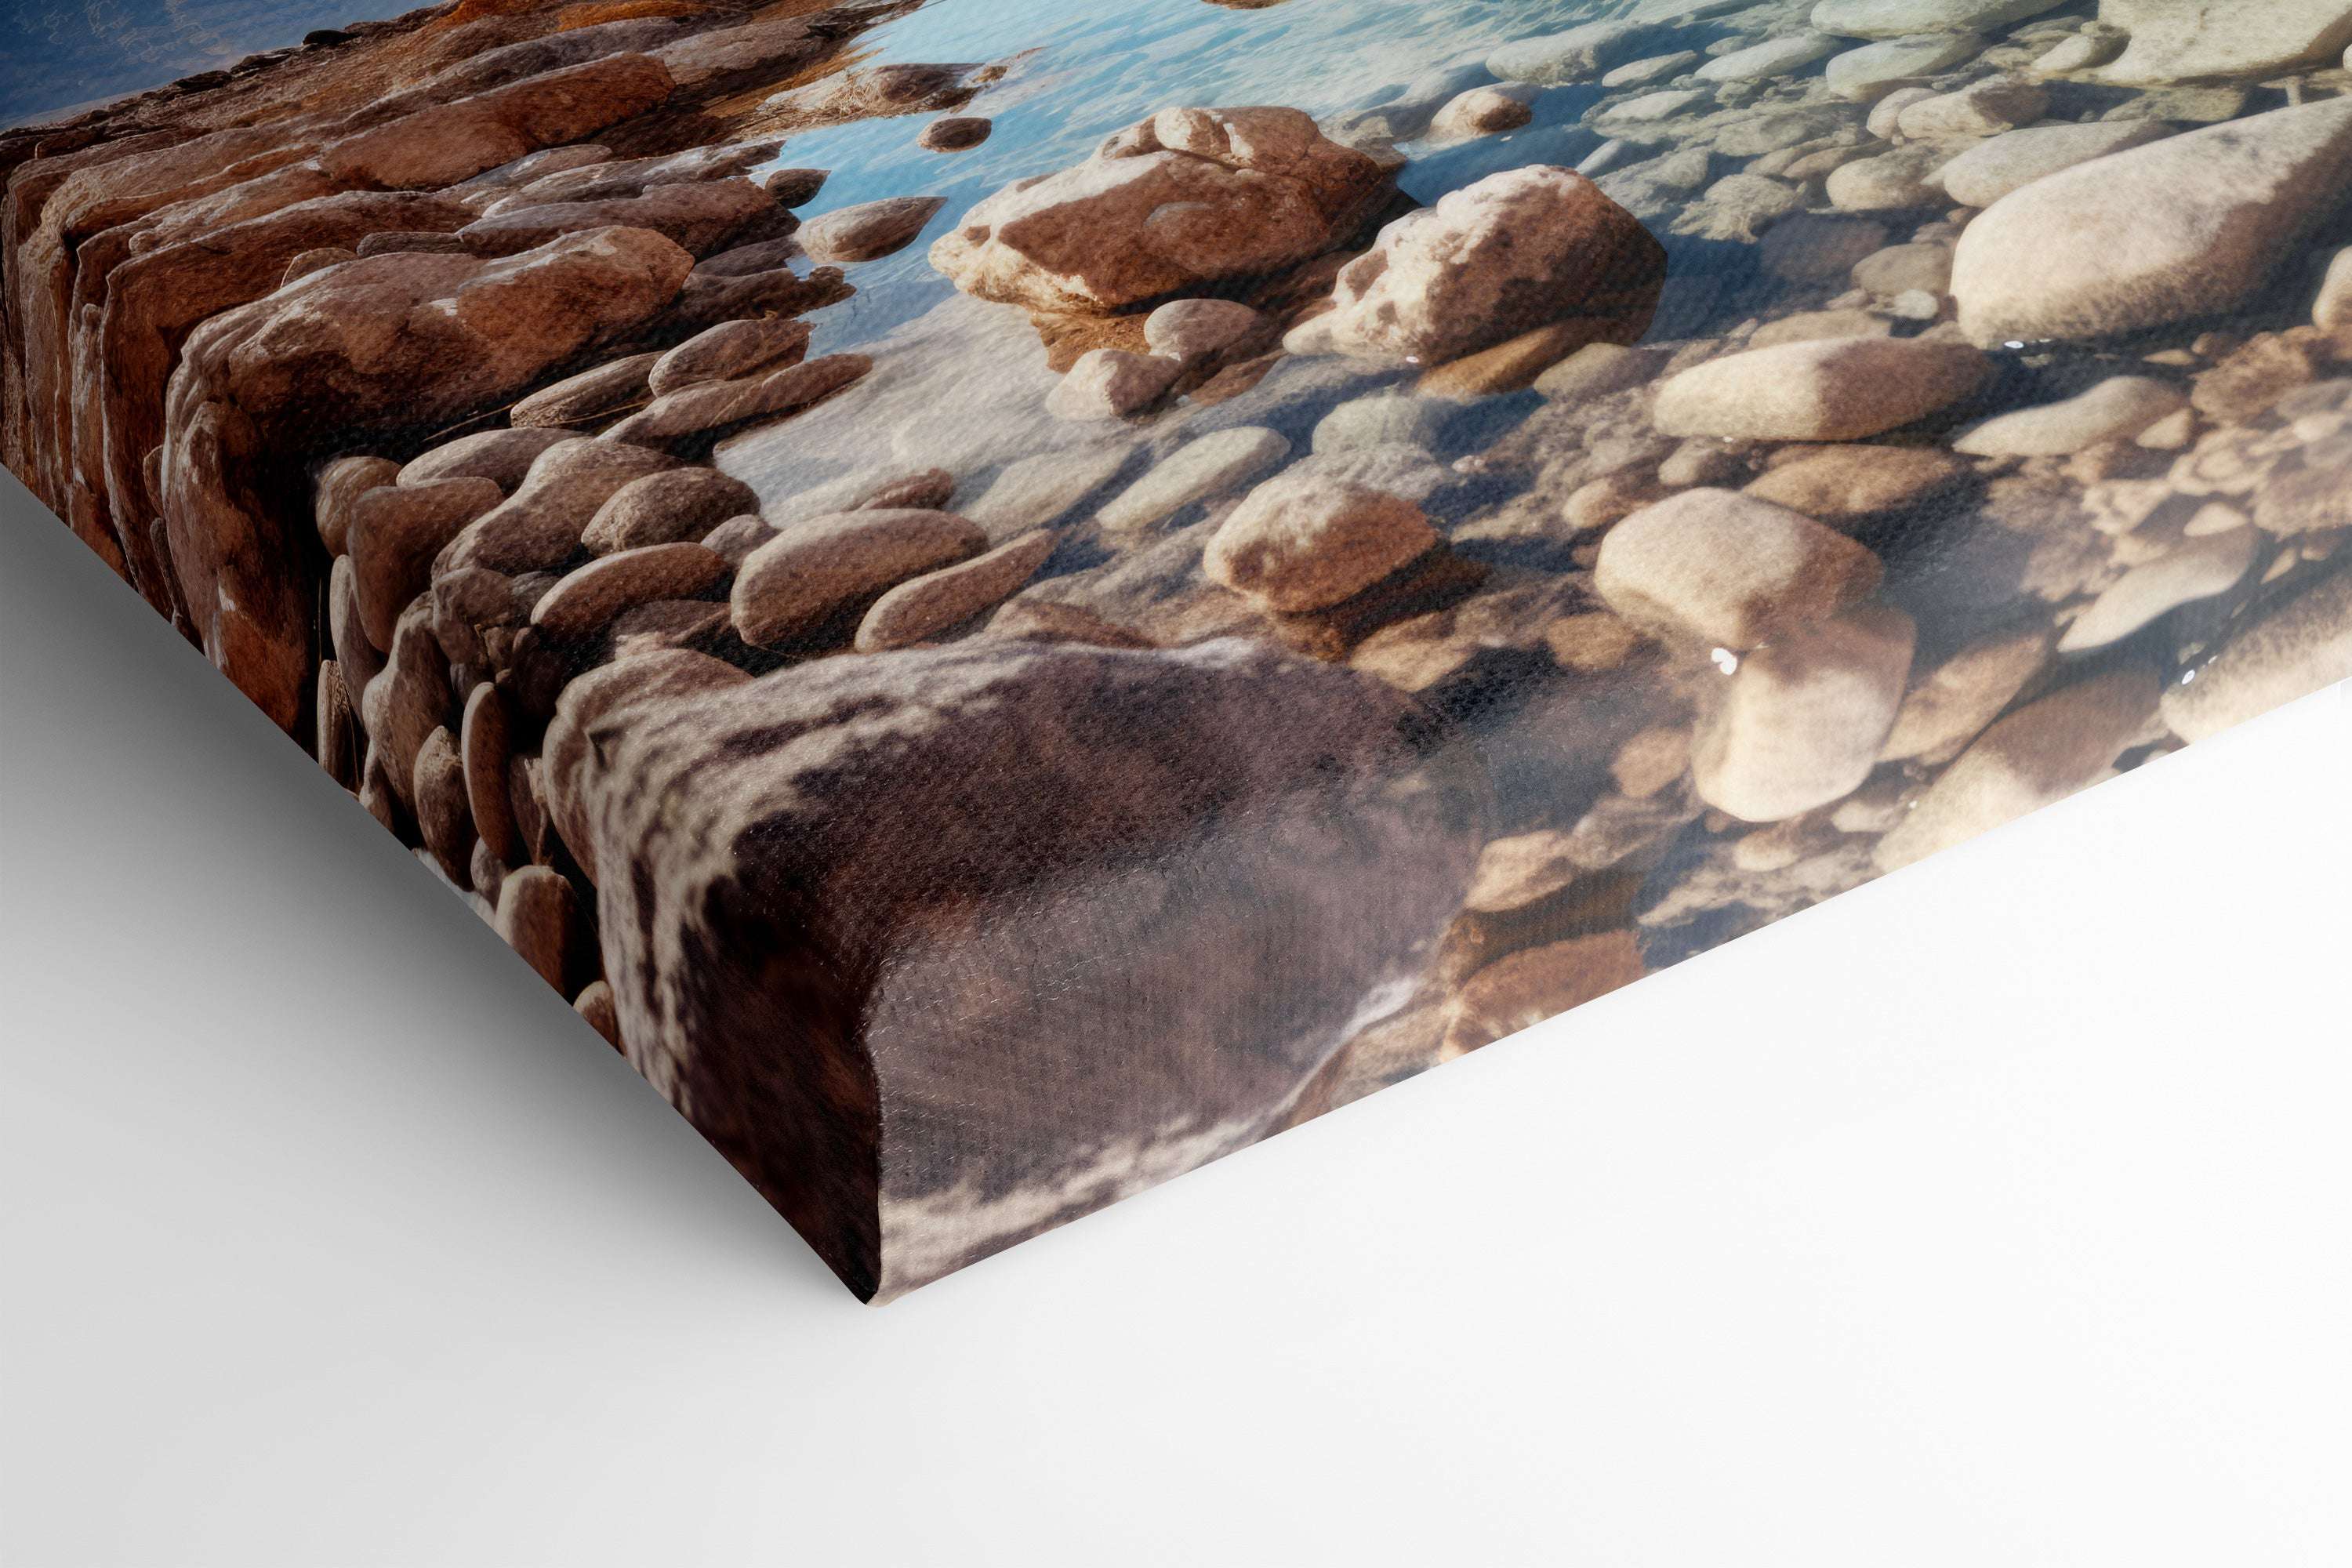 Crystalline Forms of the Dead Sea - Canvas Print - Artoholica Ready to Hang Canvas Print